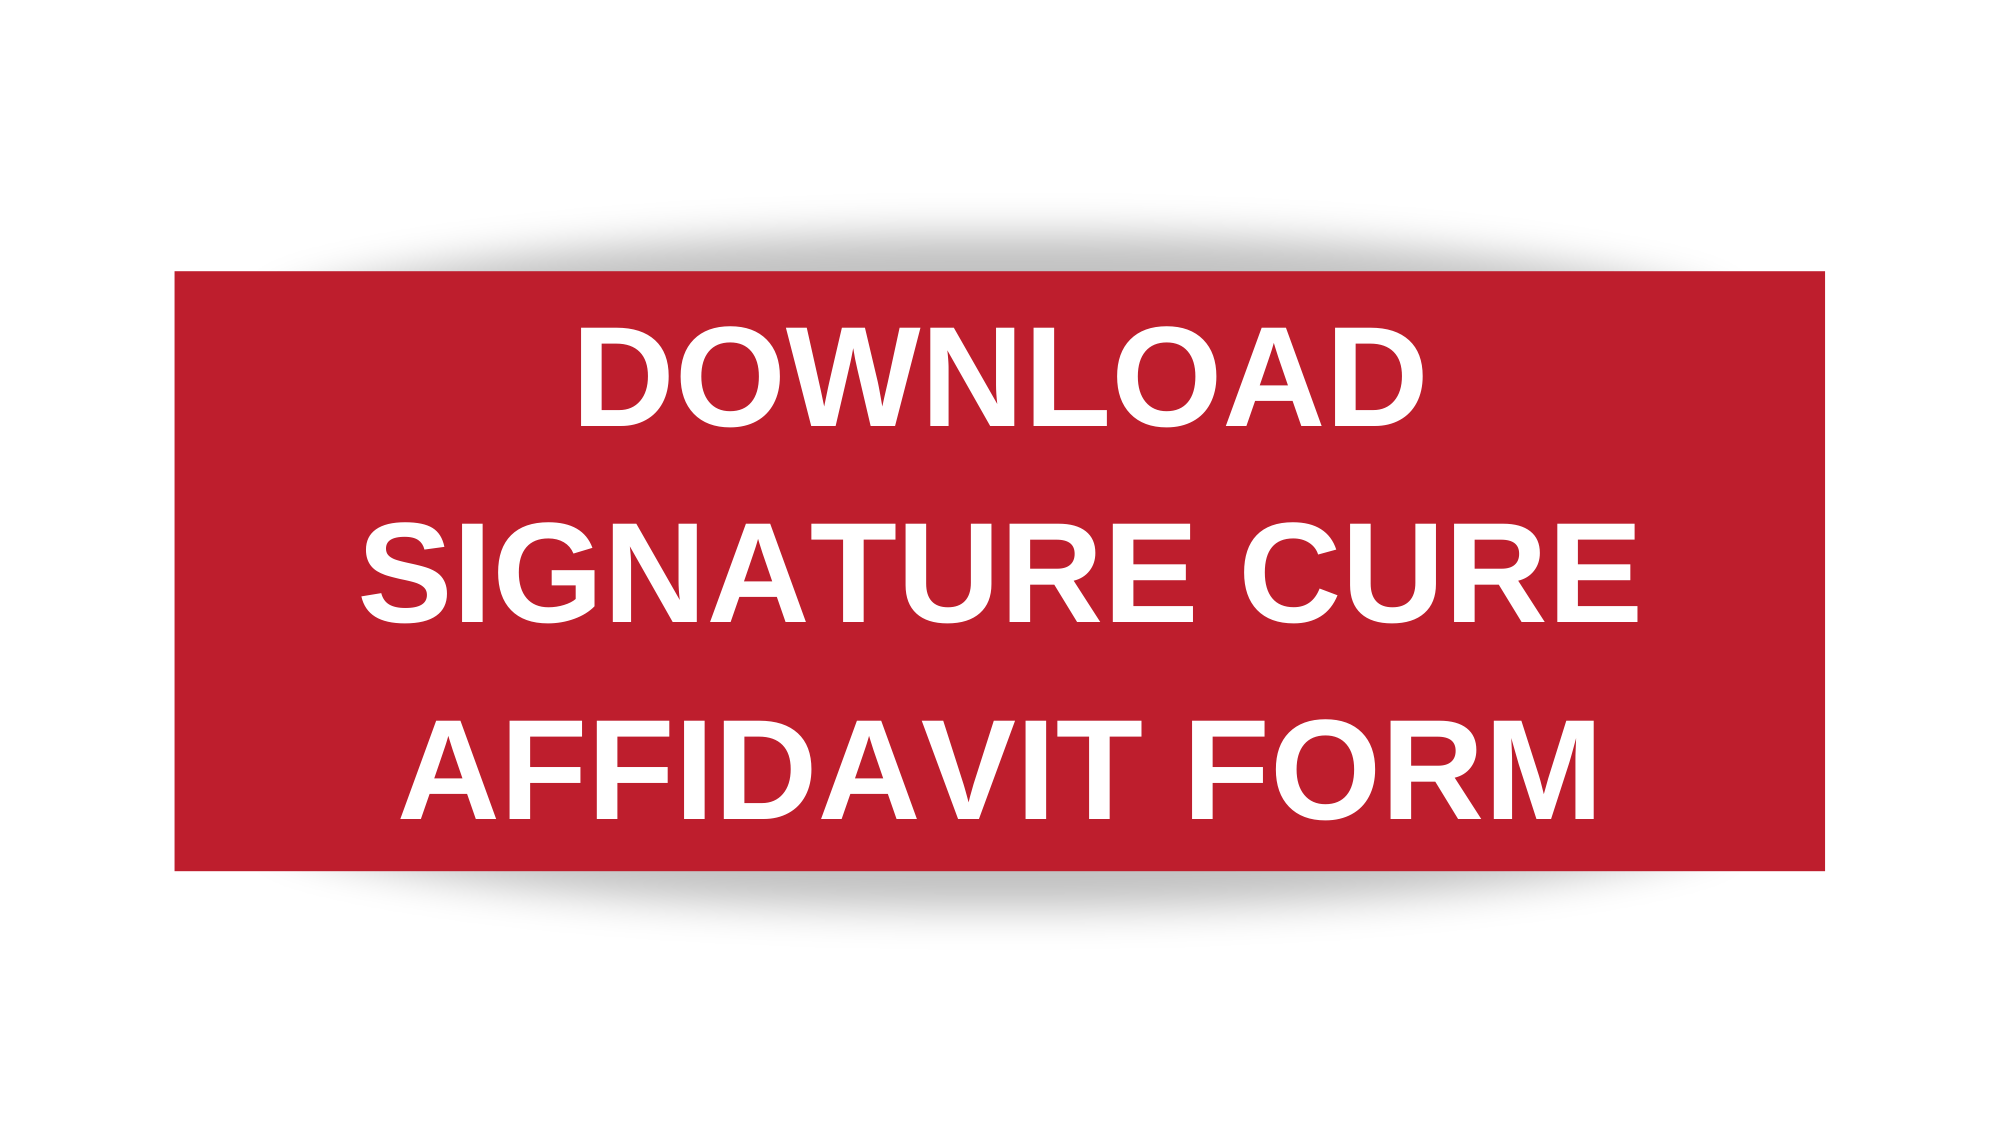 Download Signature Cure Affidavit Form